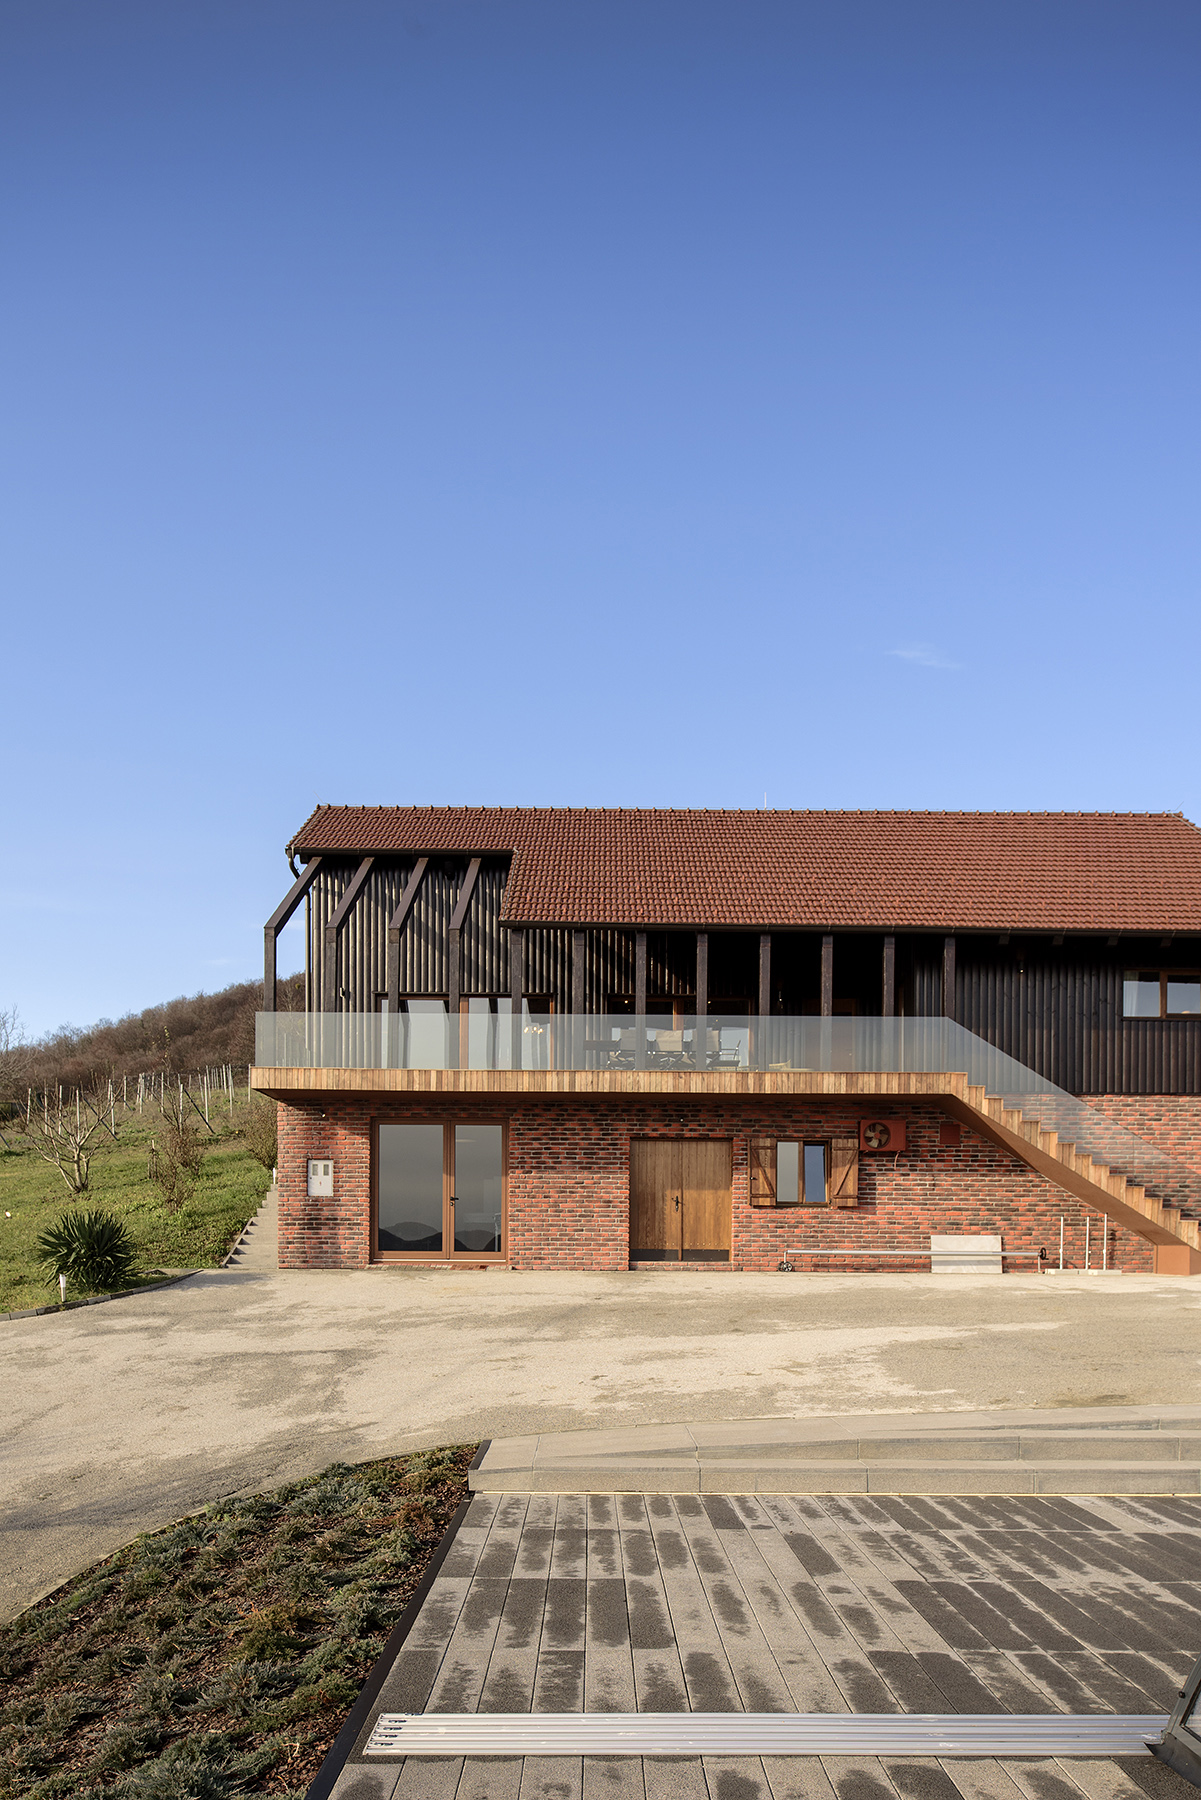 Iza ove moderne zagorske kleti Lotus Expo House koja se nalazi u Zagorju stoji studio Lotus Architecti, odnosno arhitektica Maja Bručić.